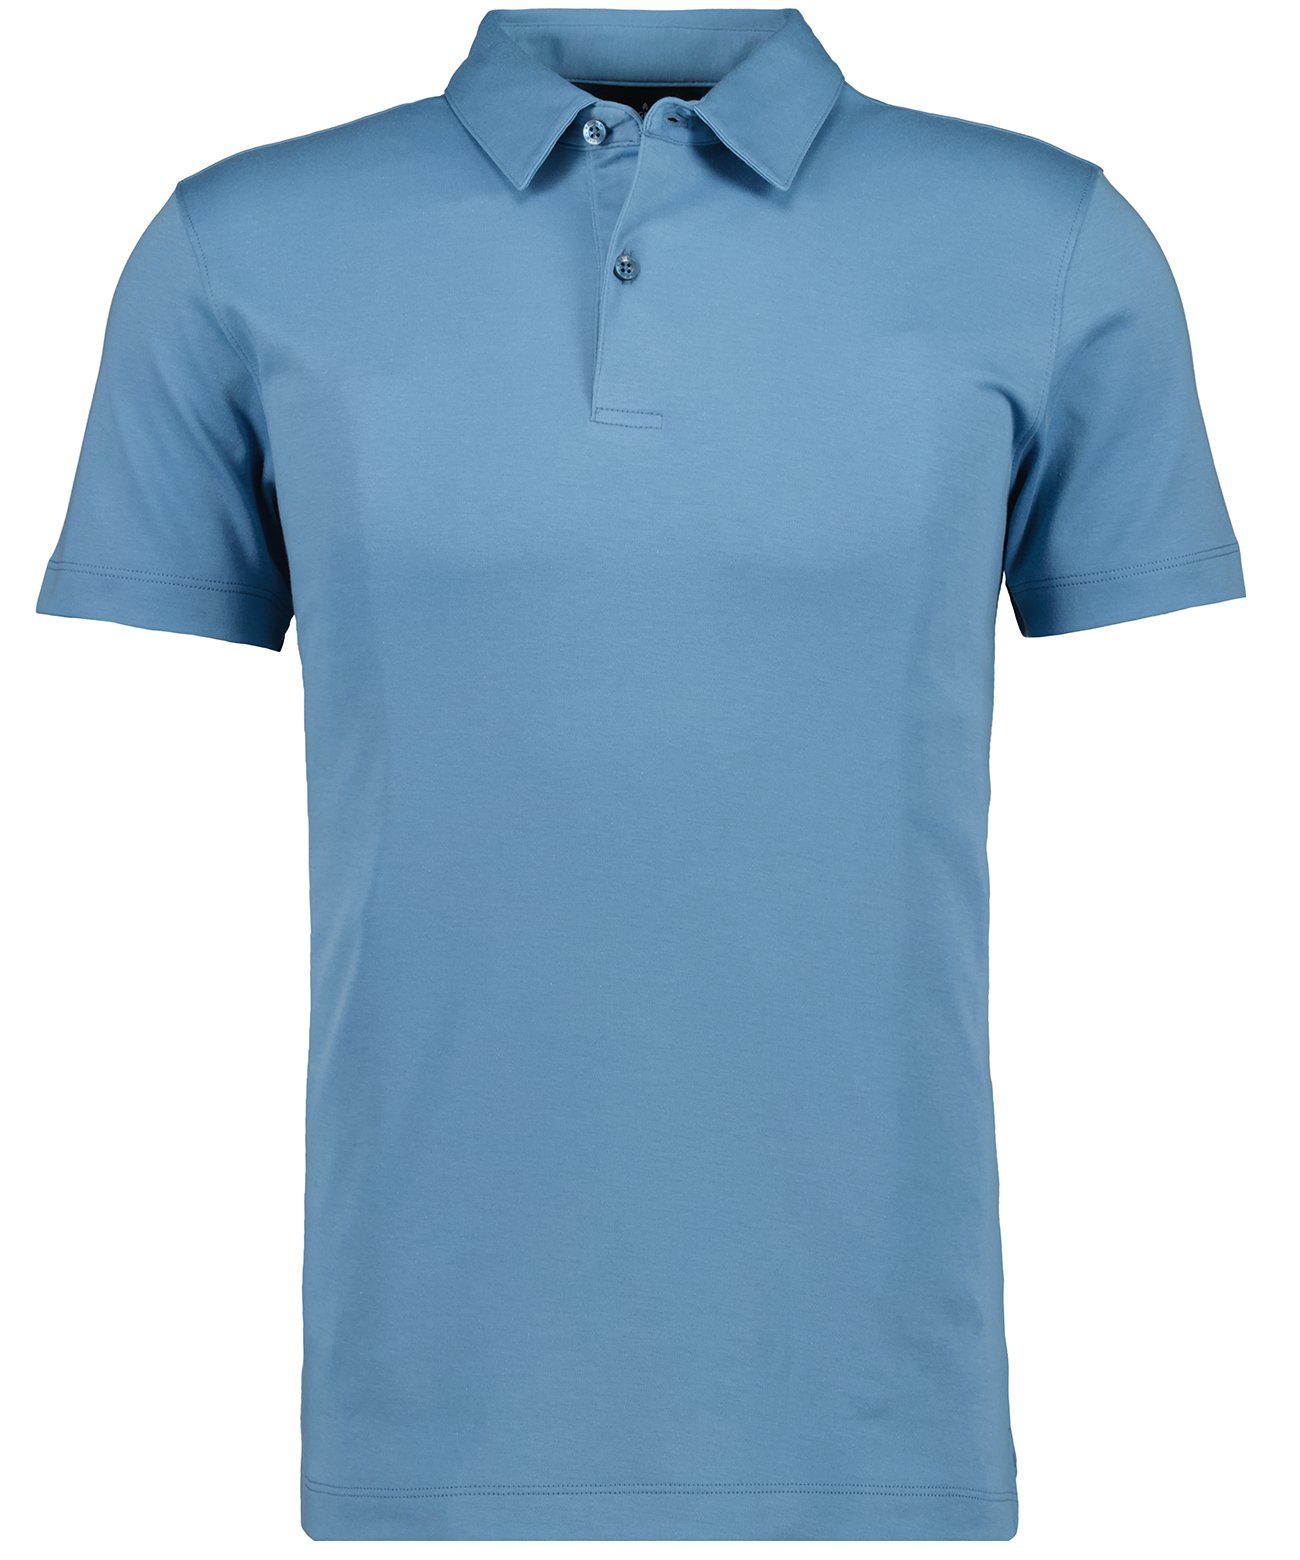 RAGMAN Poloshirt Blau-716 | Poloshirts